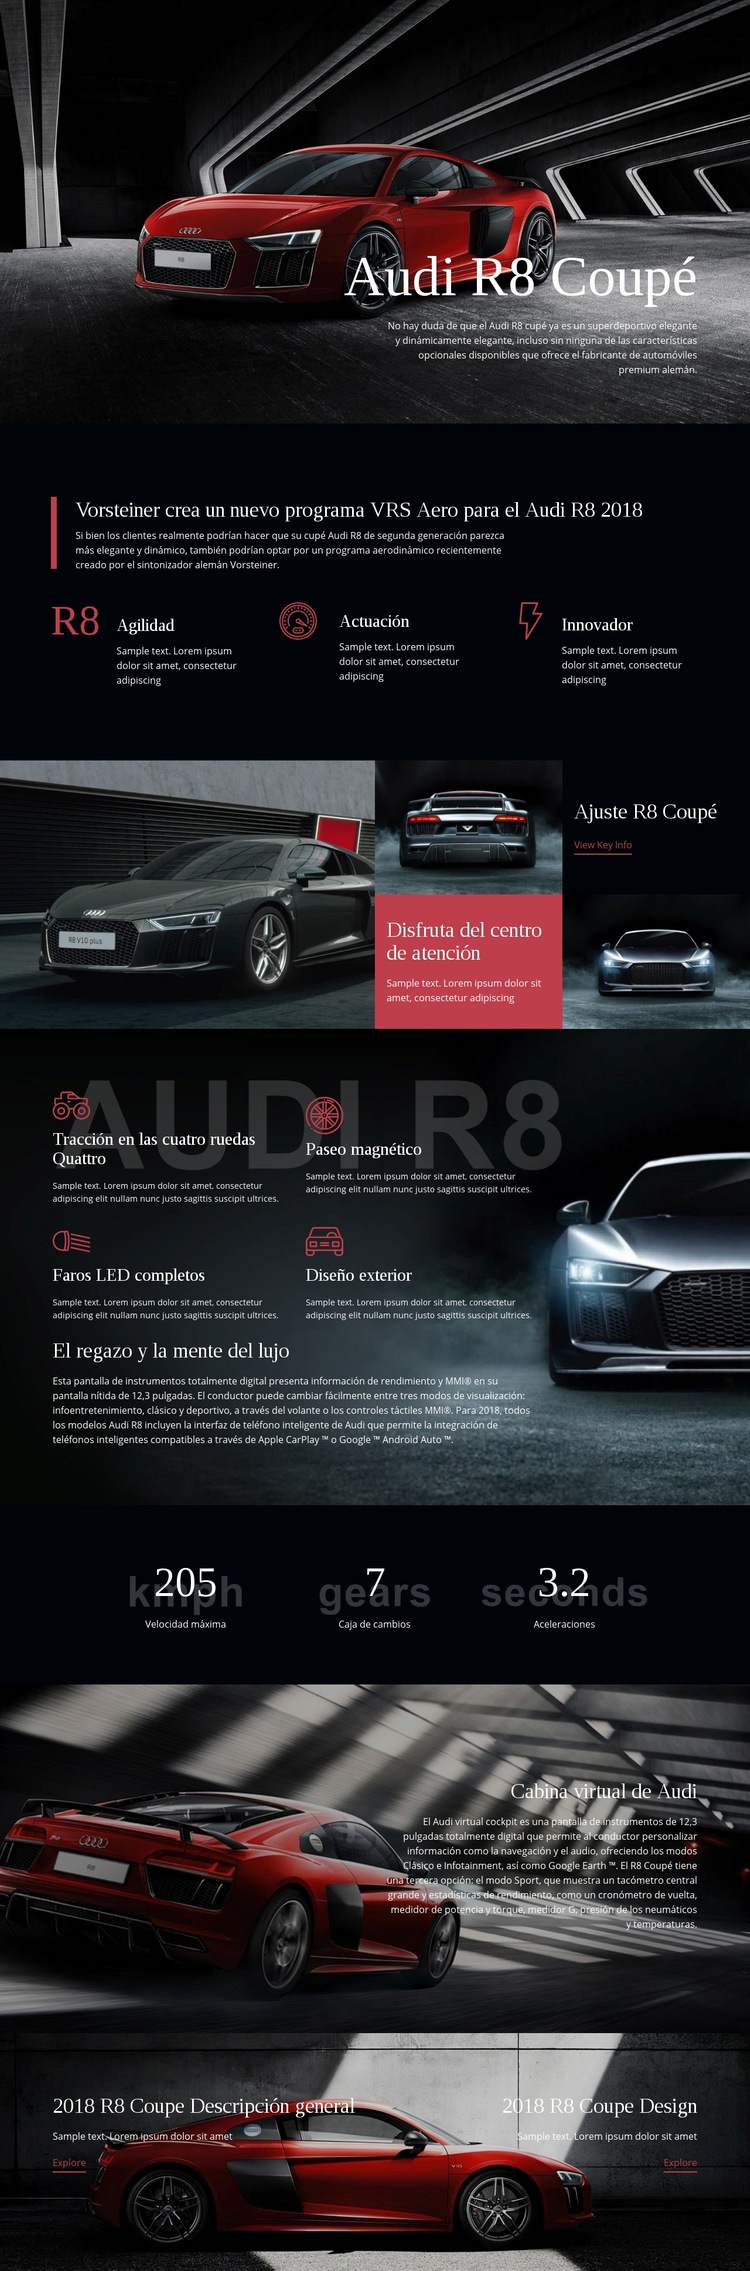 Coche Audi aero program Plantillas de creación de sitios web